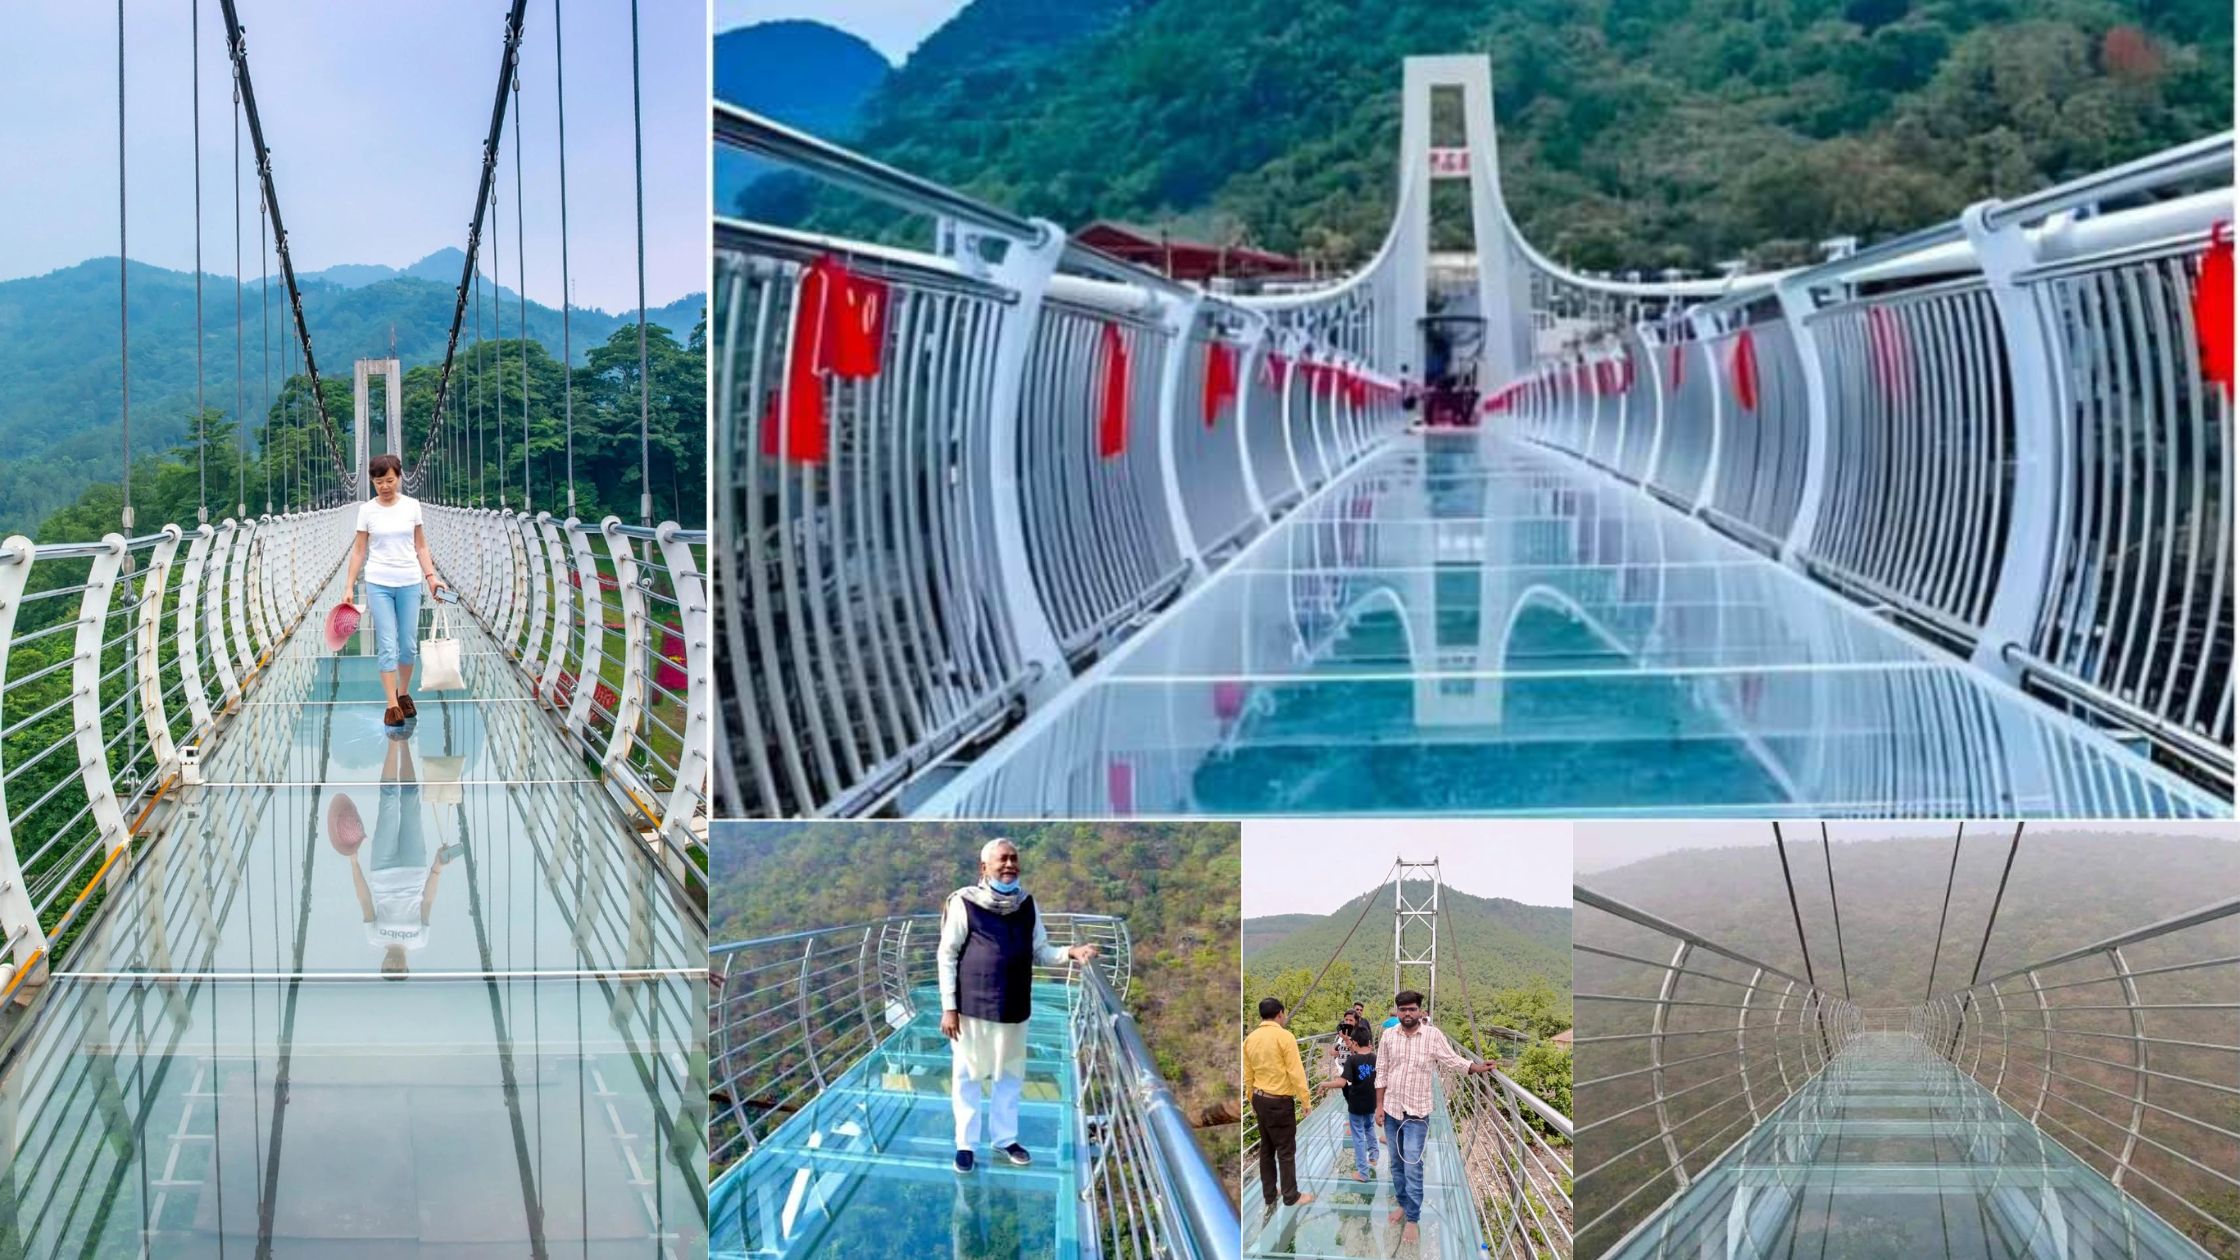 This magnificent bridge is present in Bihar